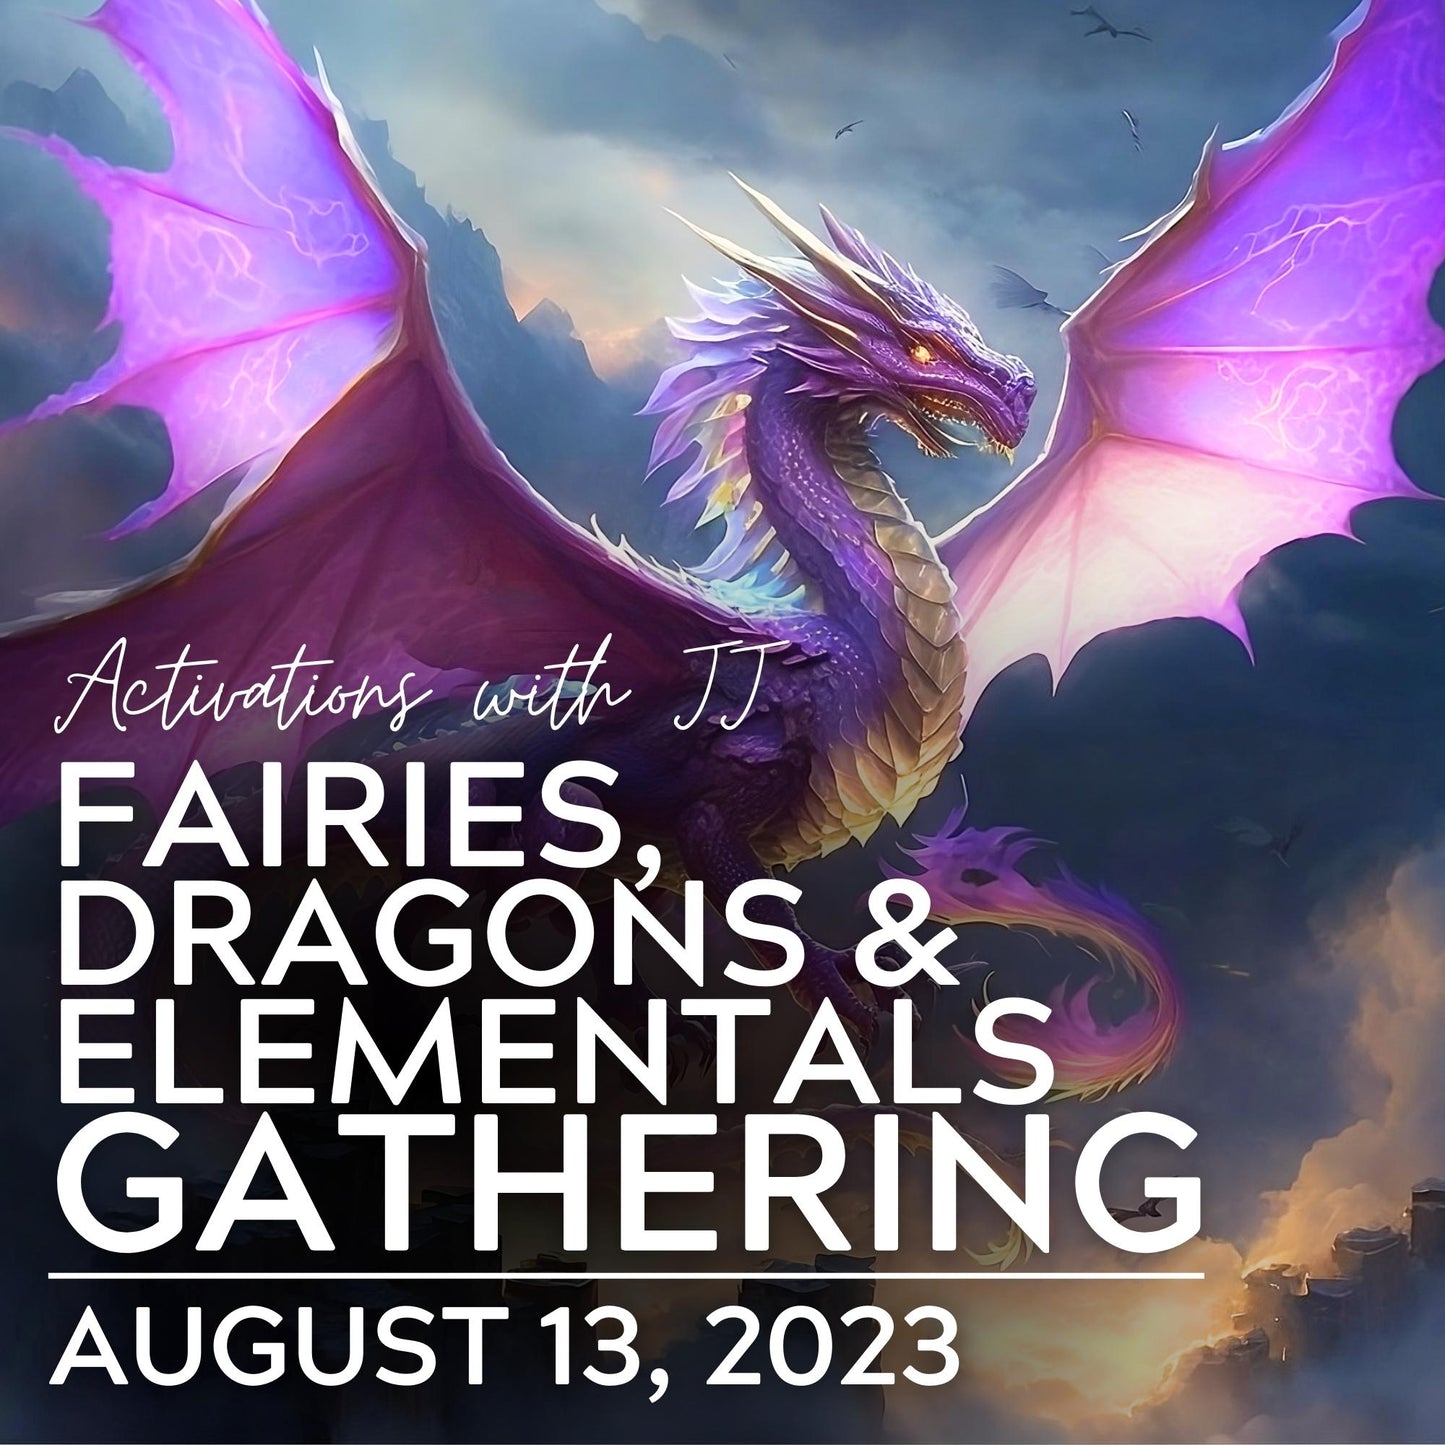 Fairies, Dragons & Elementals Gathering (MP3 Recording) | August 13, 2023